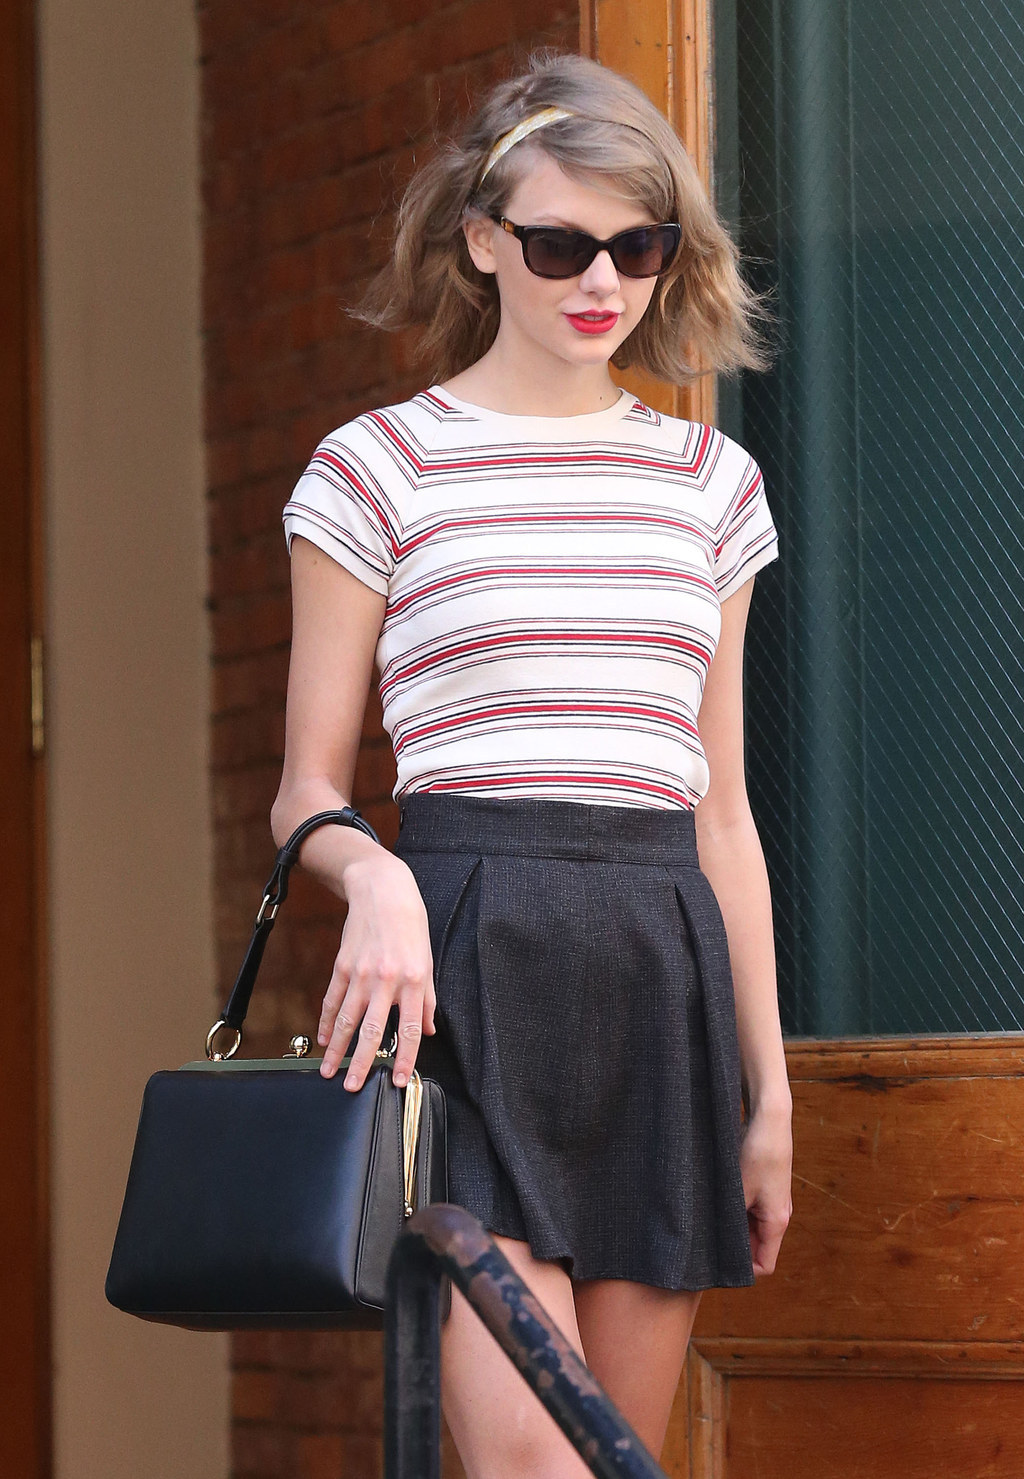 Taylor Swift's Ladylike Way of Holding a Purse